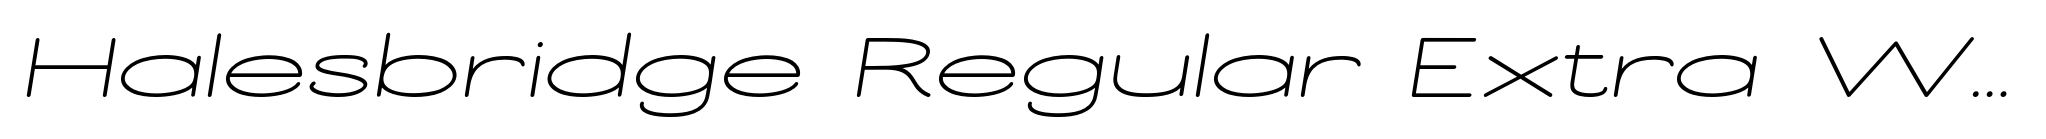 Halesbridge Regular Extra Wide Italic image